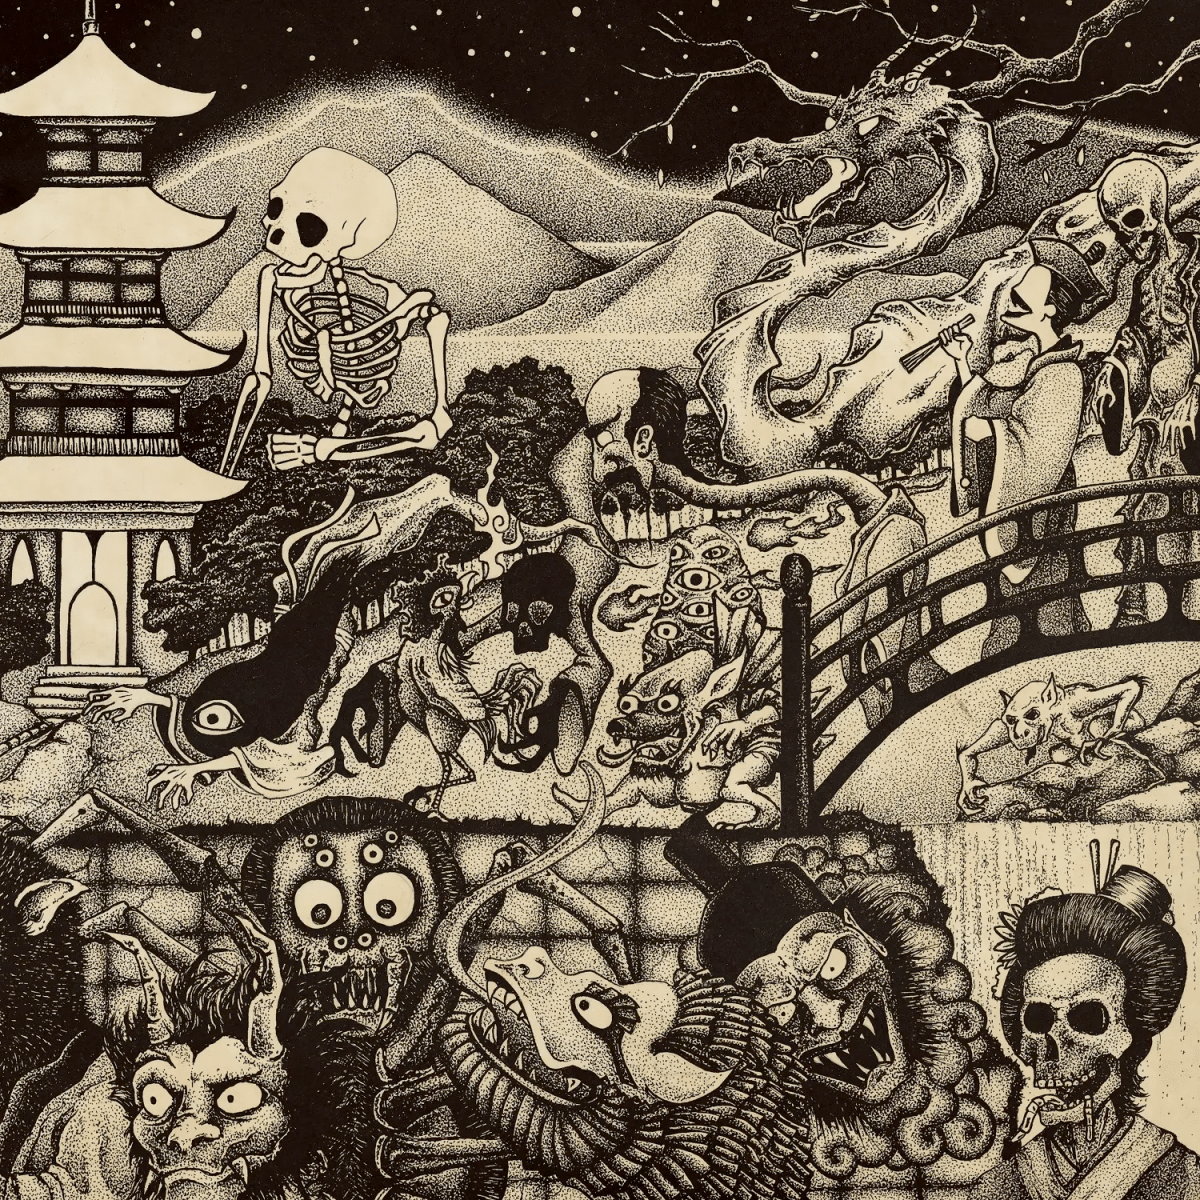 earthless-night-parade-of-one-hundred-demons-album-cover